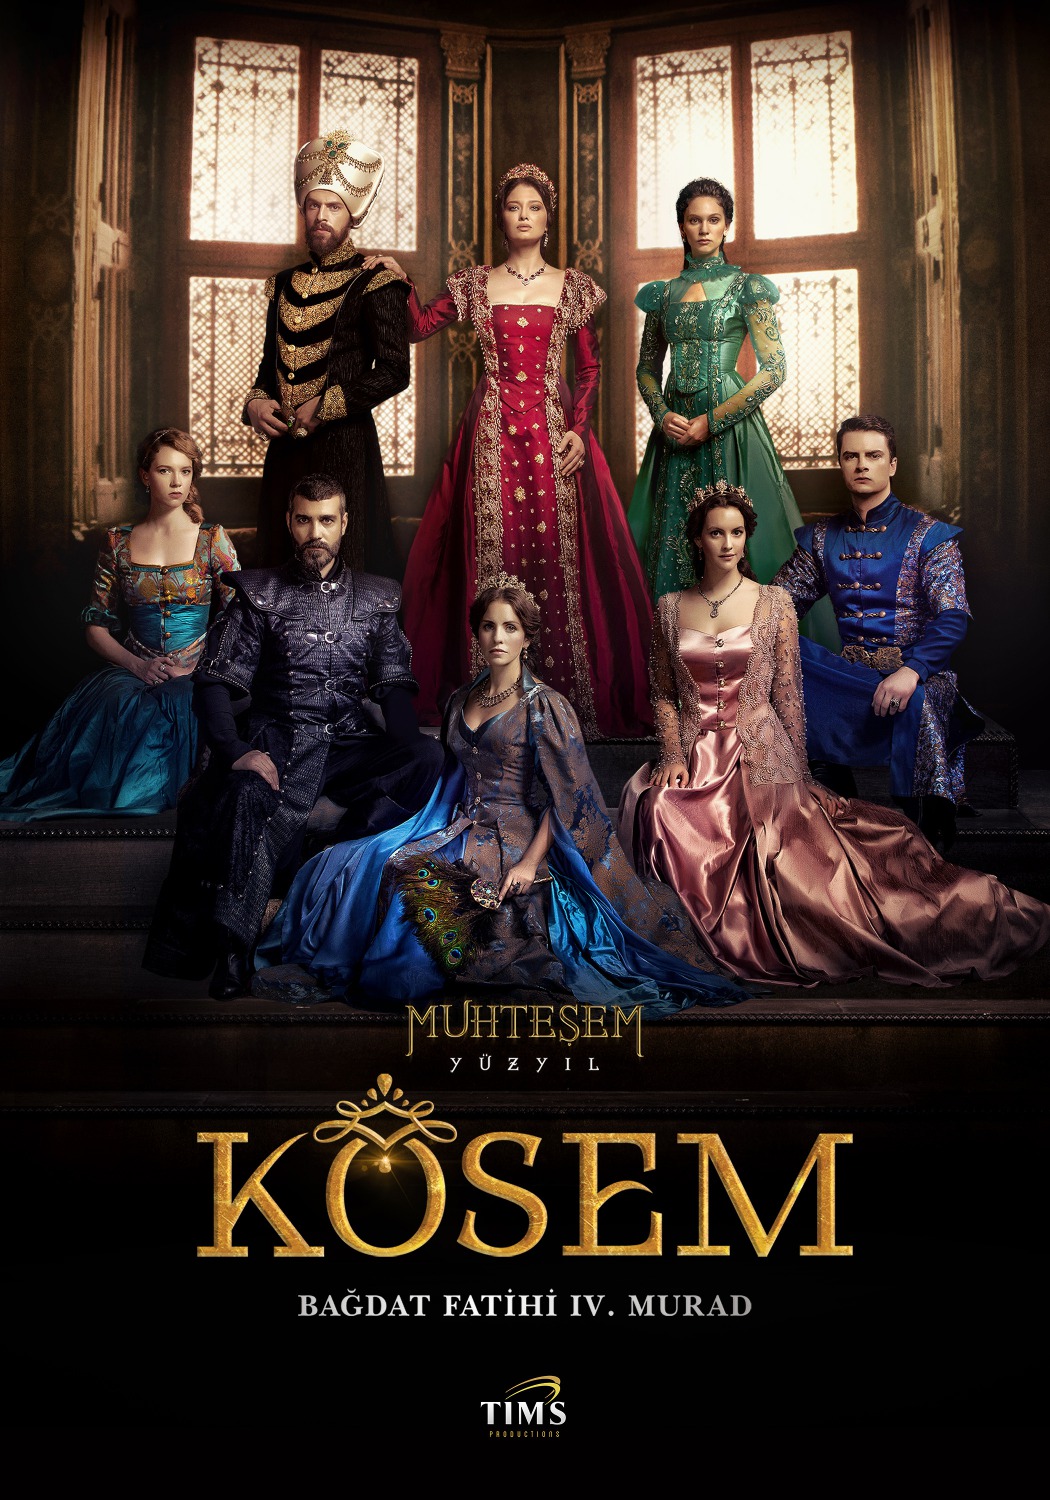 Extra Large TV Poster Image for Muhtesem Yüzyil: Kösem (#1 of 10)